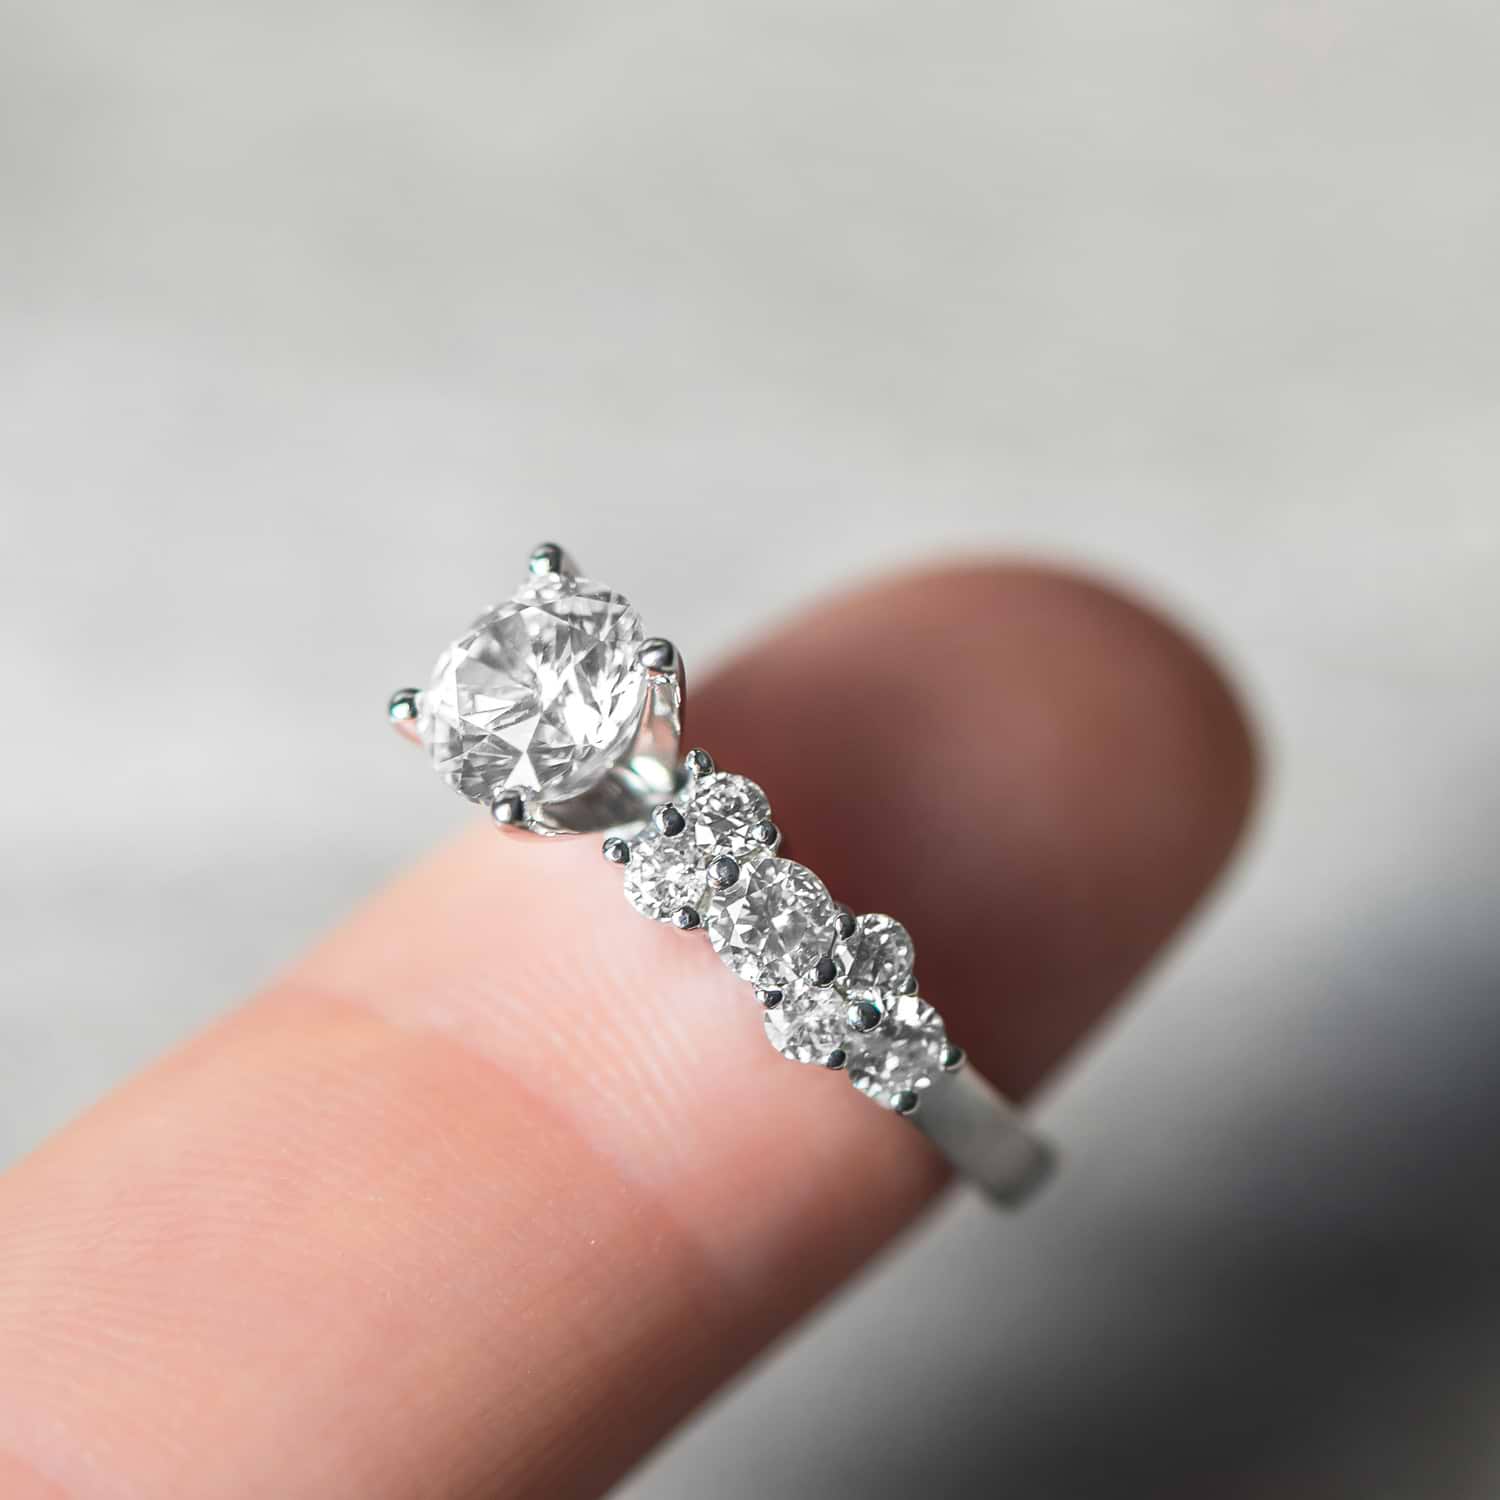 Diamond Garland Engagement Ring Setting Platinum (0.66ct)